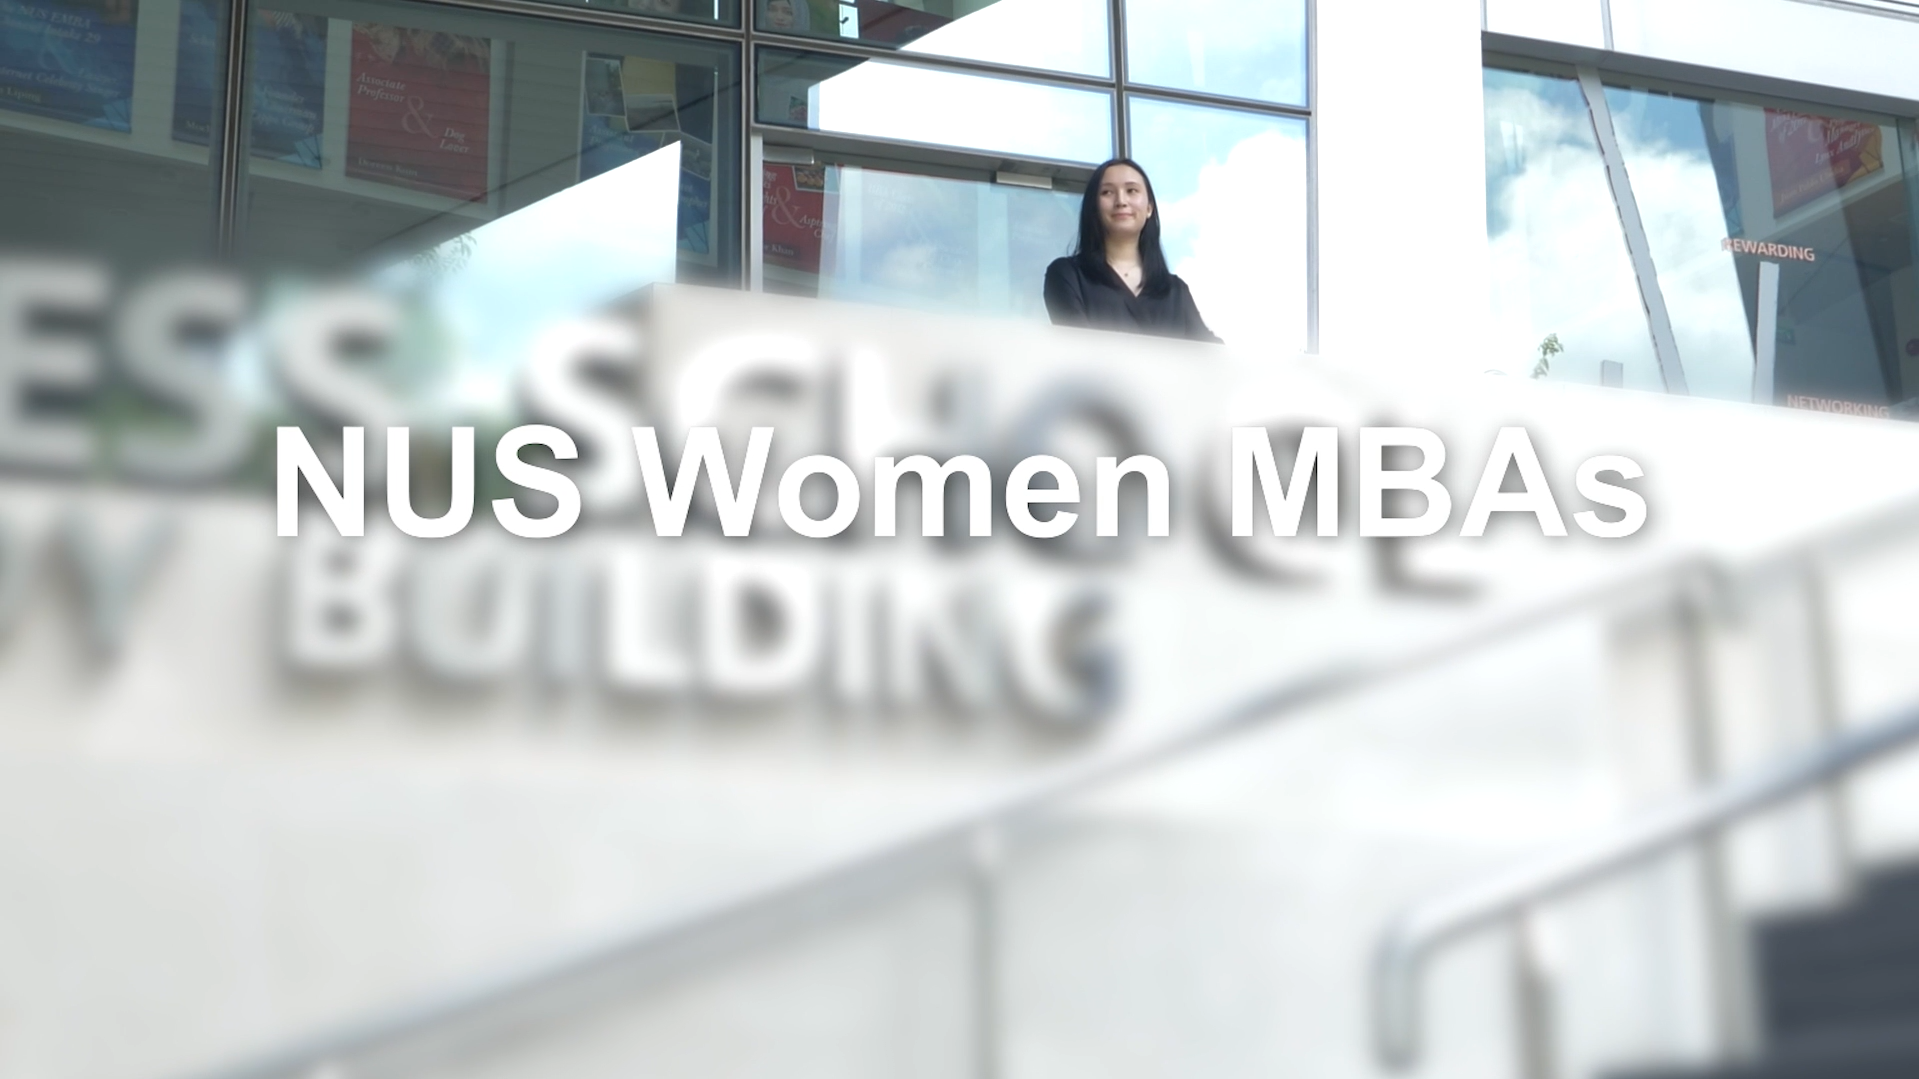 Women in the NUS MBA